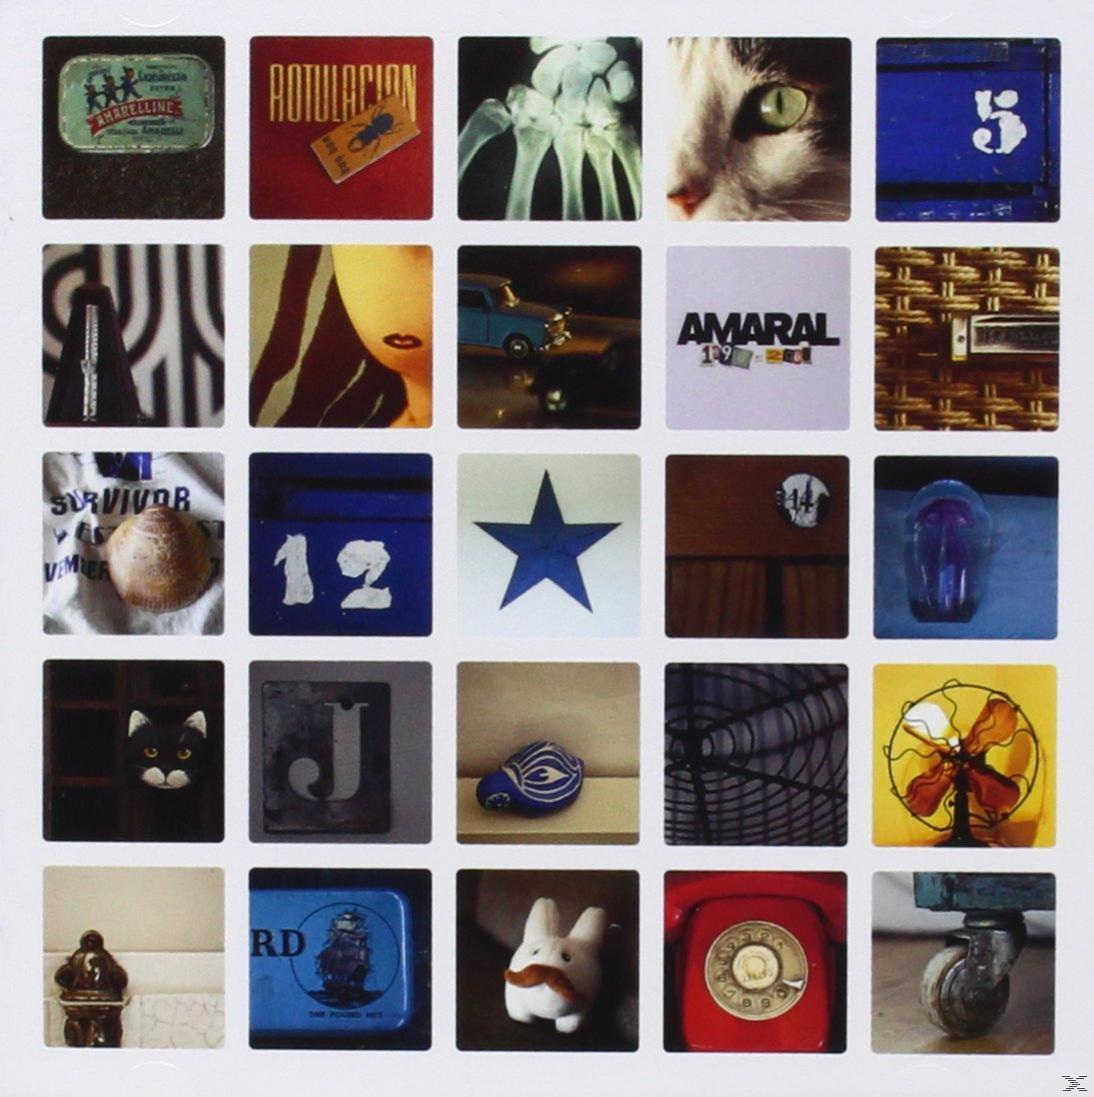 Amaral - - (CD) 1998-2008